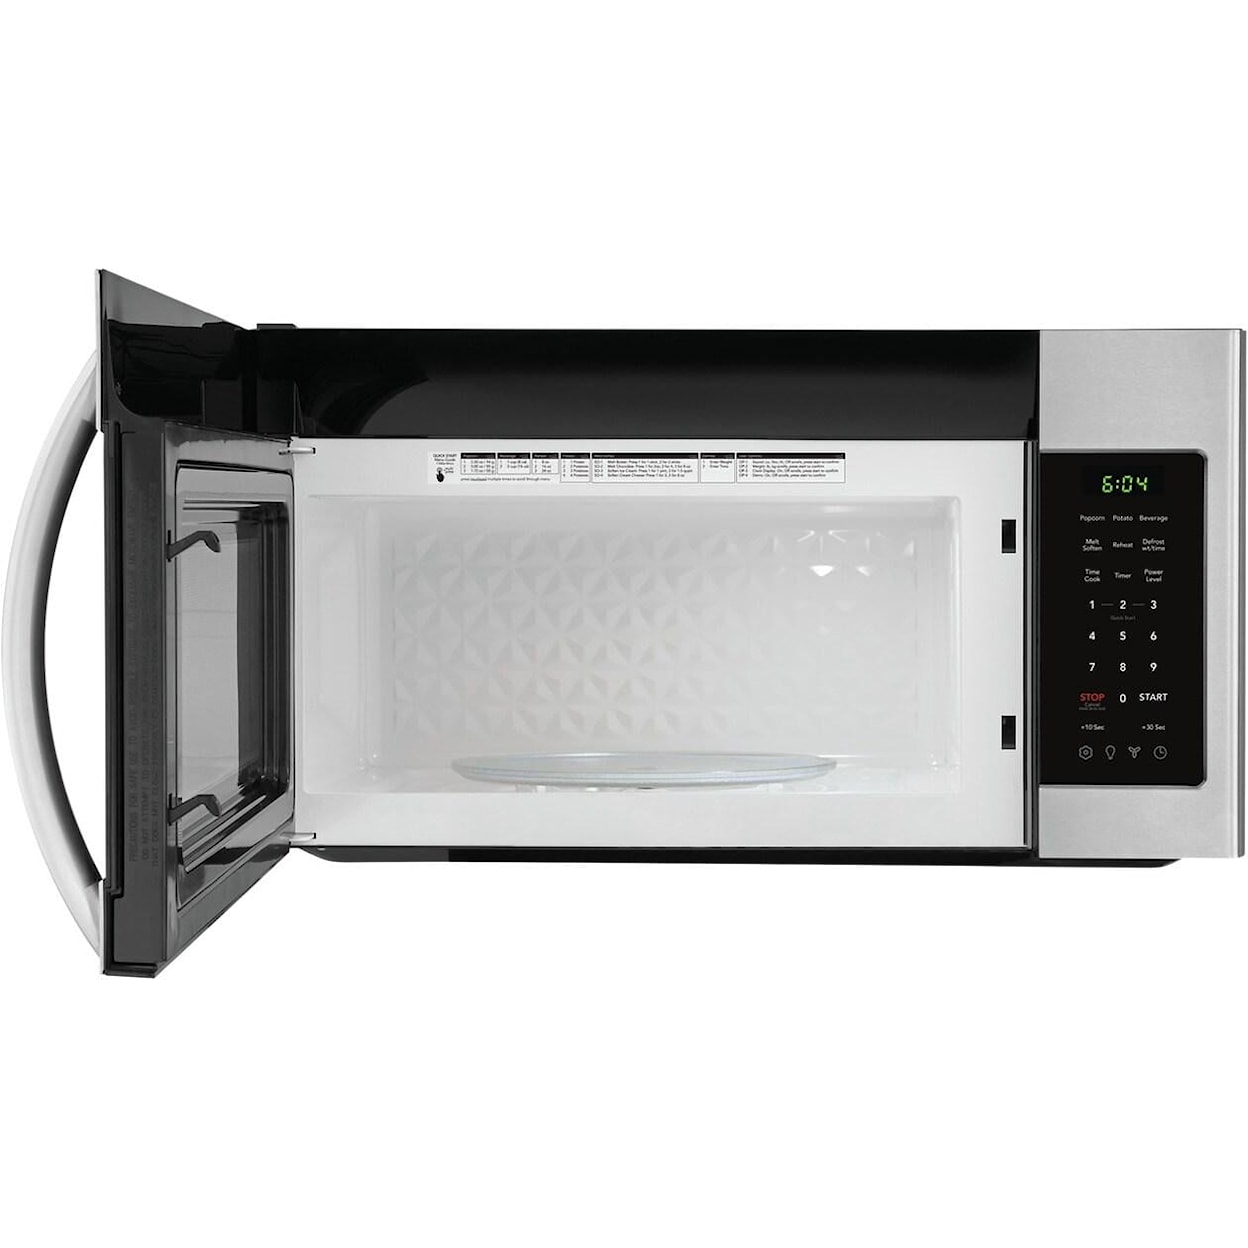 Frigidaire Microwave Over The Range Microwave